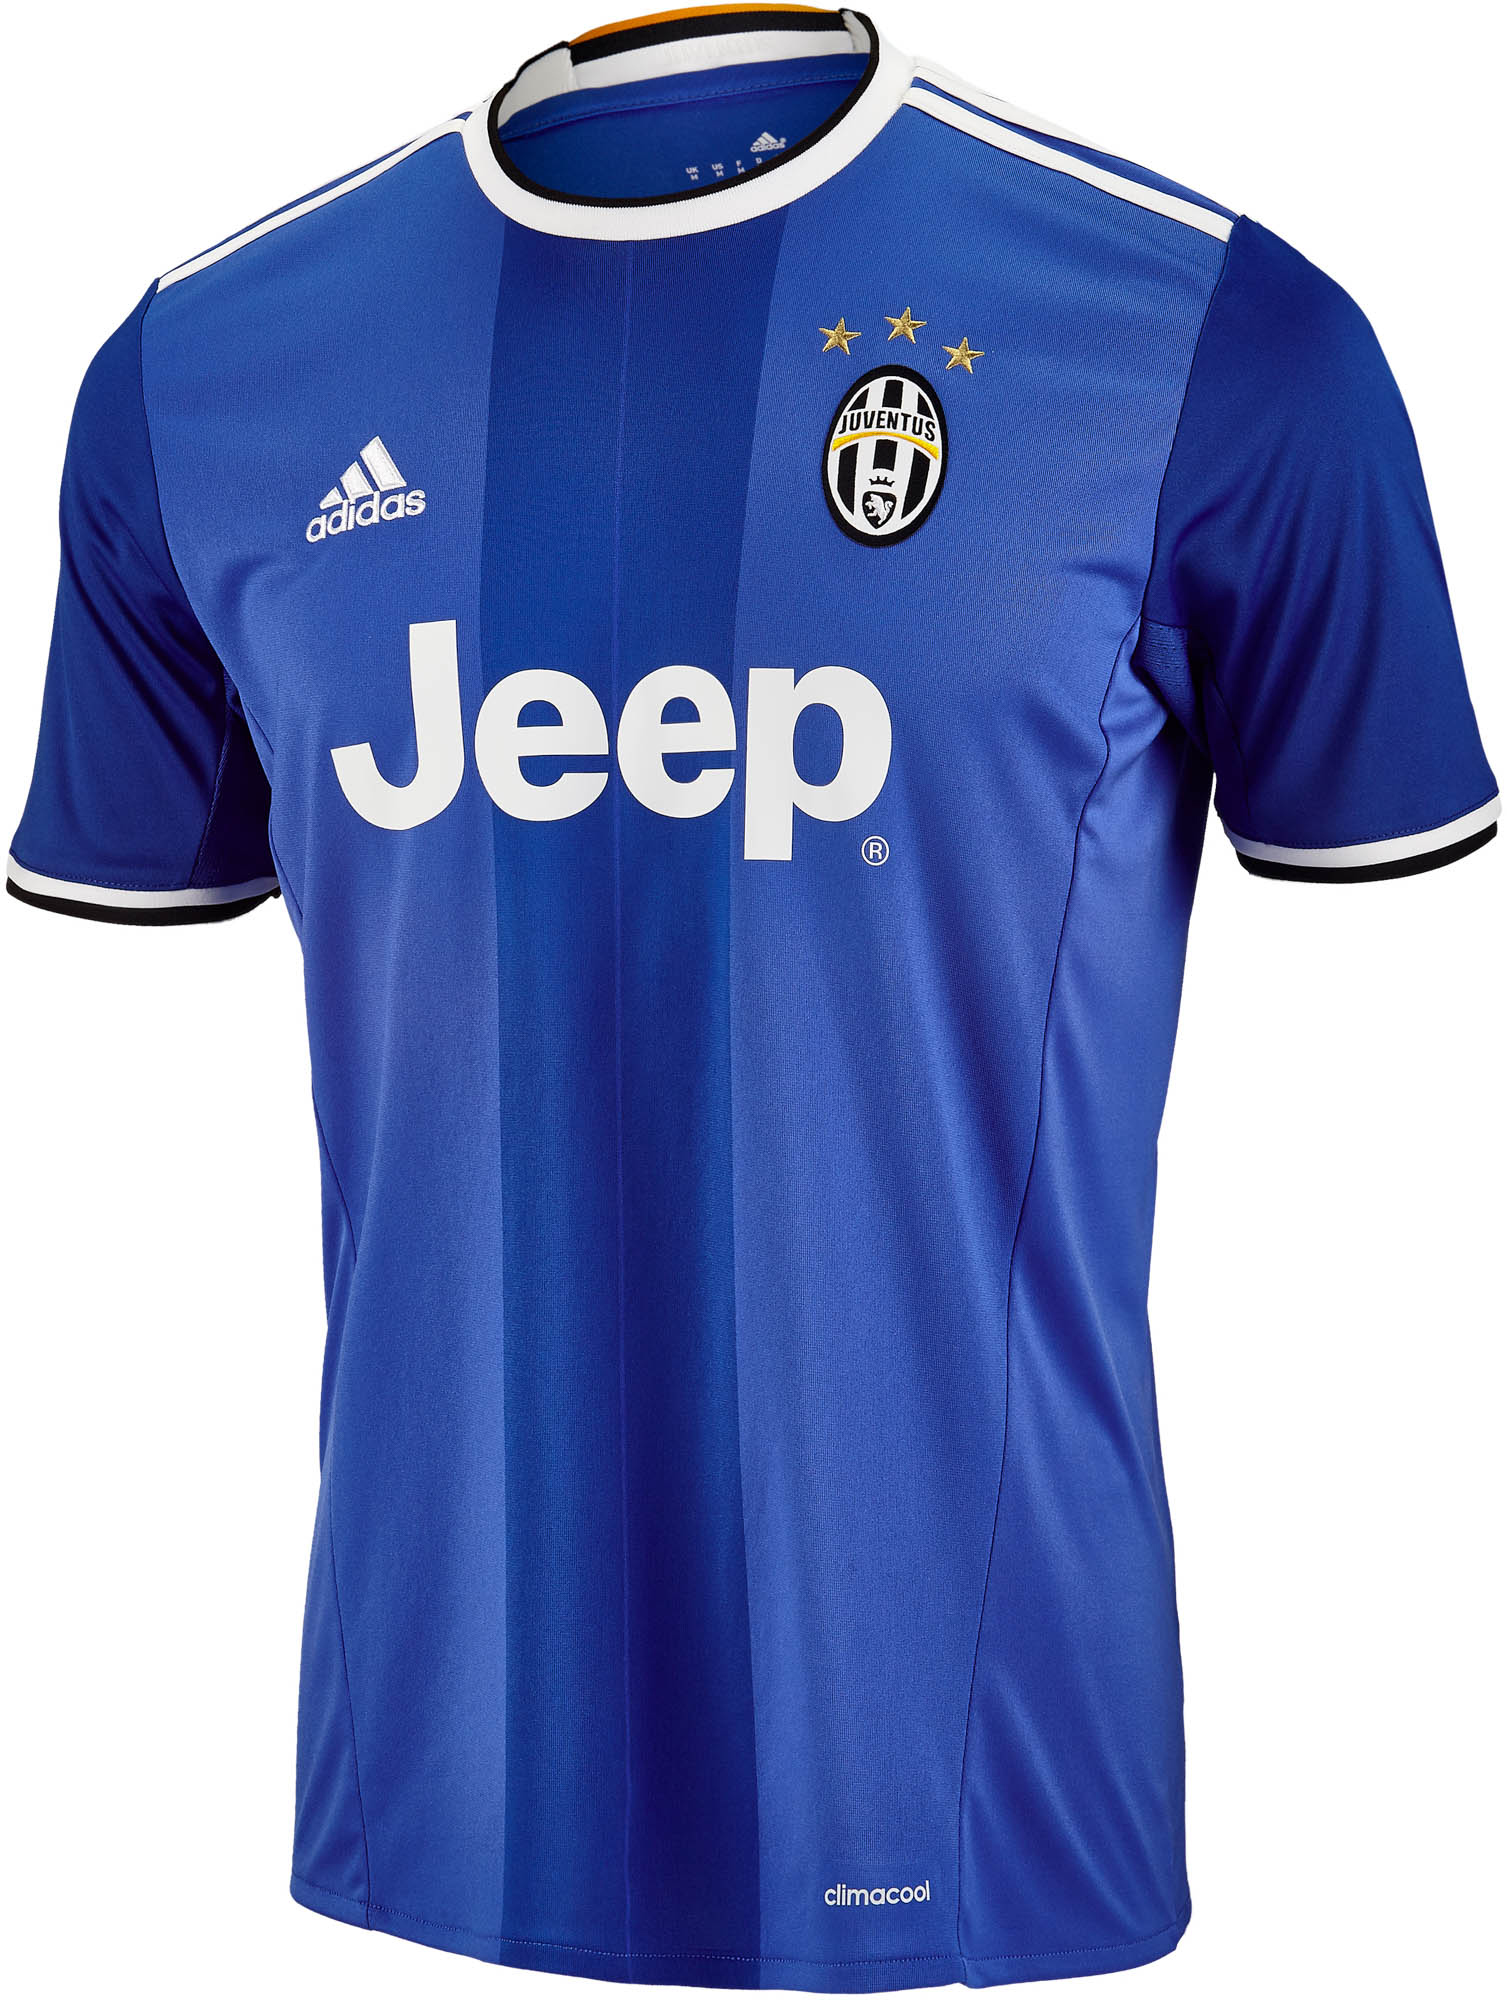 lont Zonder hoofd dwaas adidas Juventus Away Jersey - 2016 Juventus Soccer Jerseys